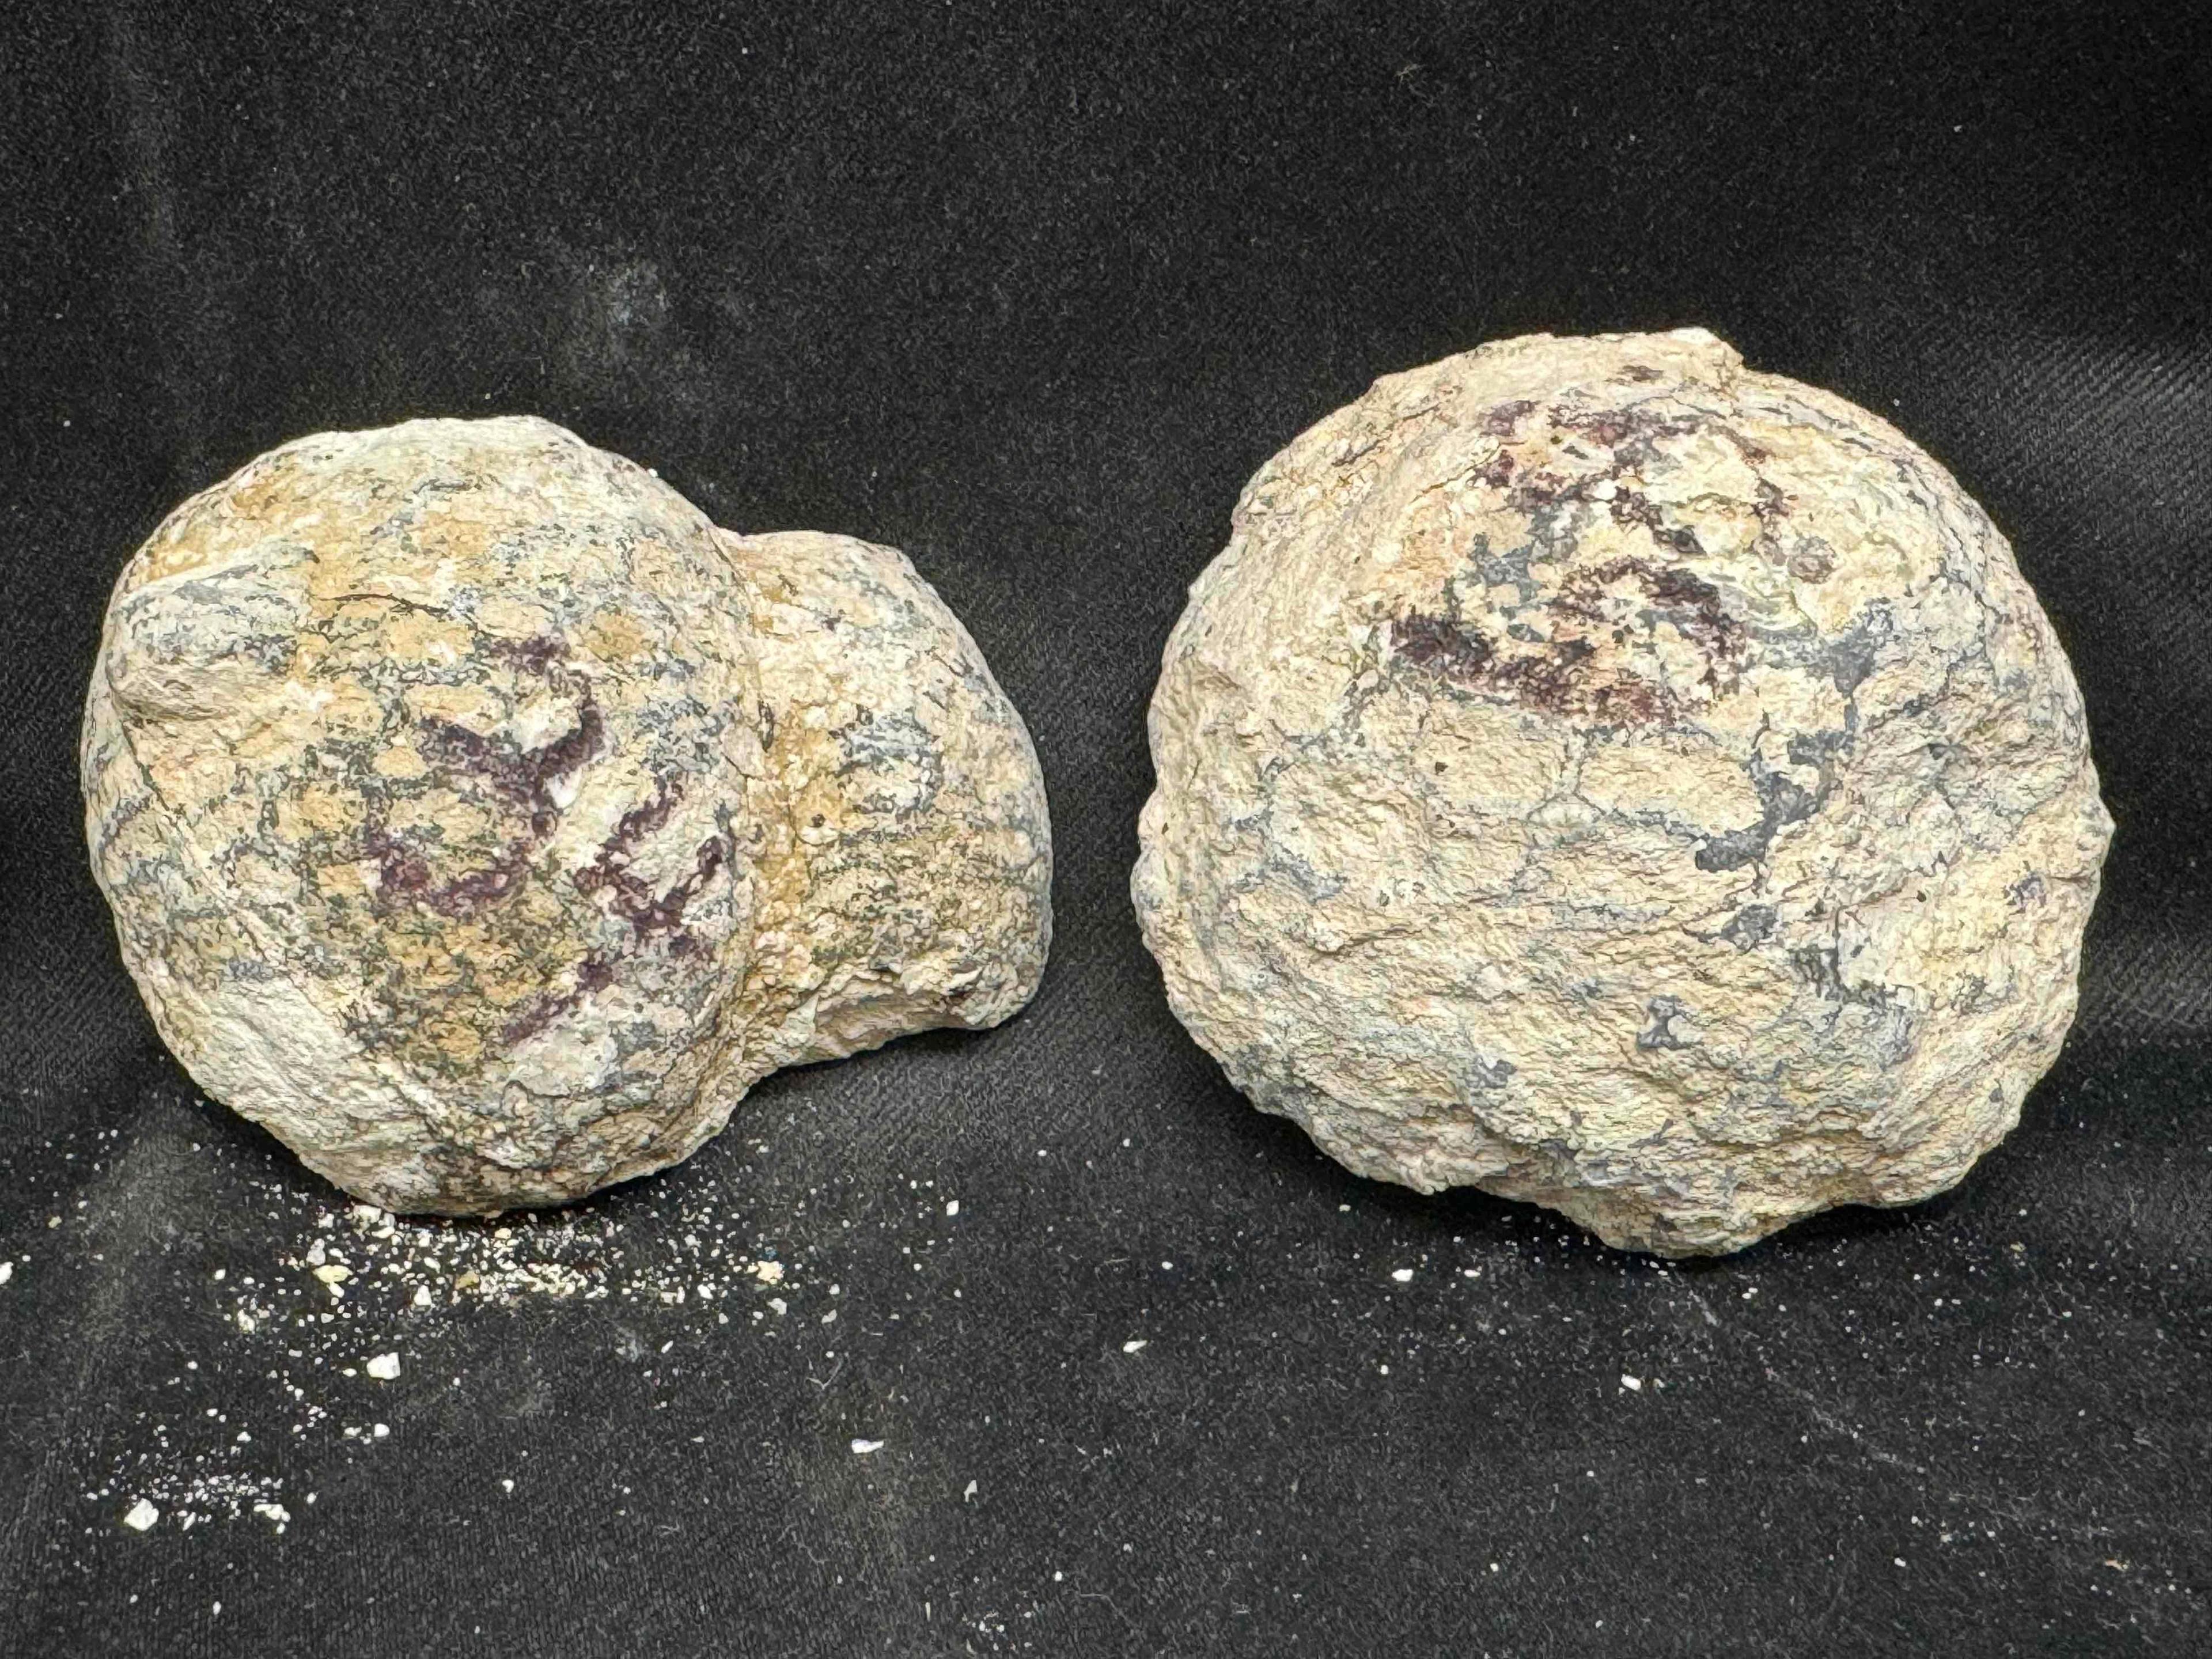 4 Geode Halves Mineral Specimens 1.15lbs